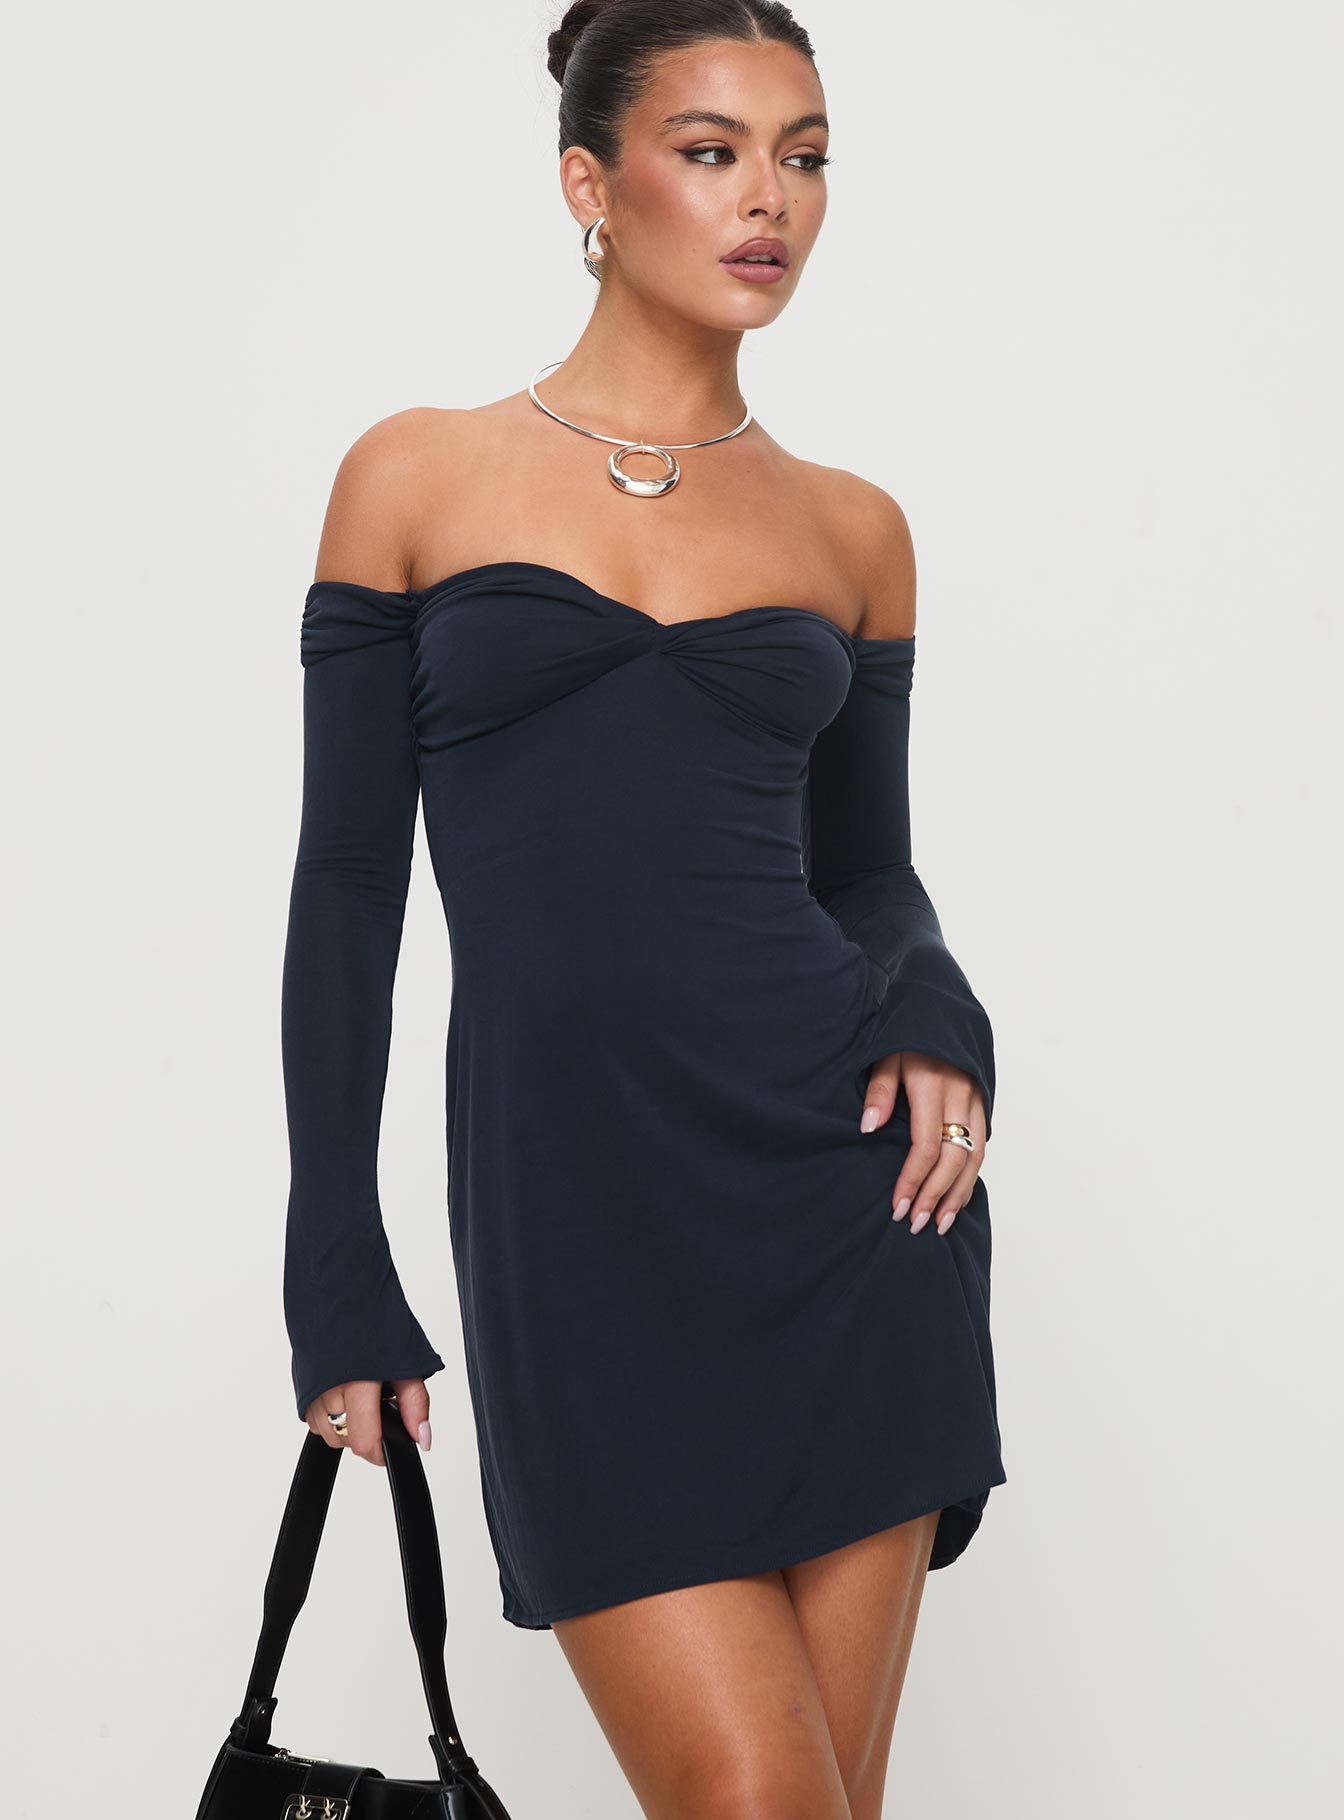 Shop Formal Dress - Suizie Off The Shoulder Mini Dress Navy fourth image